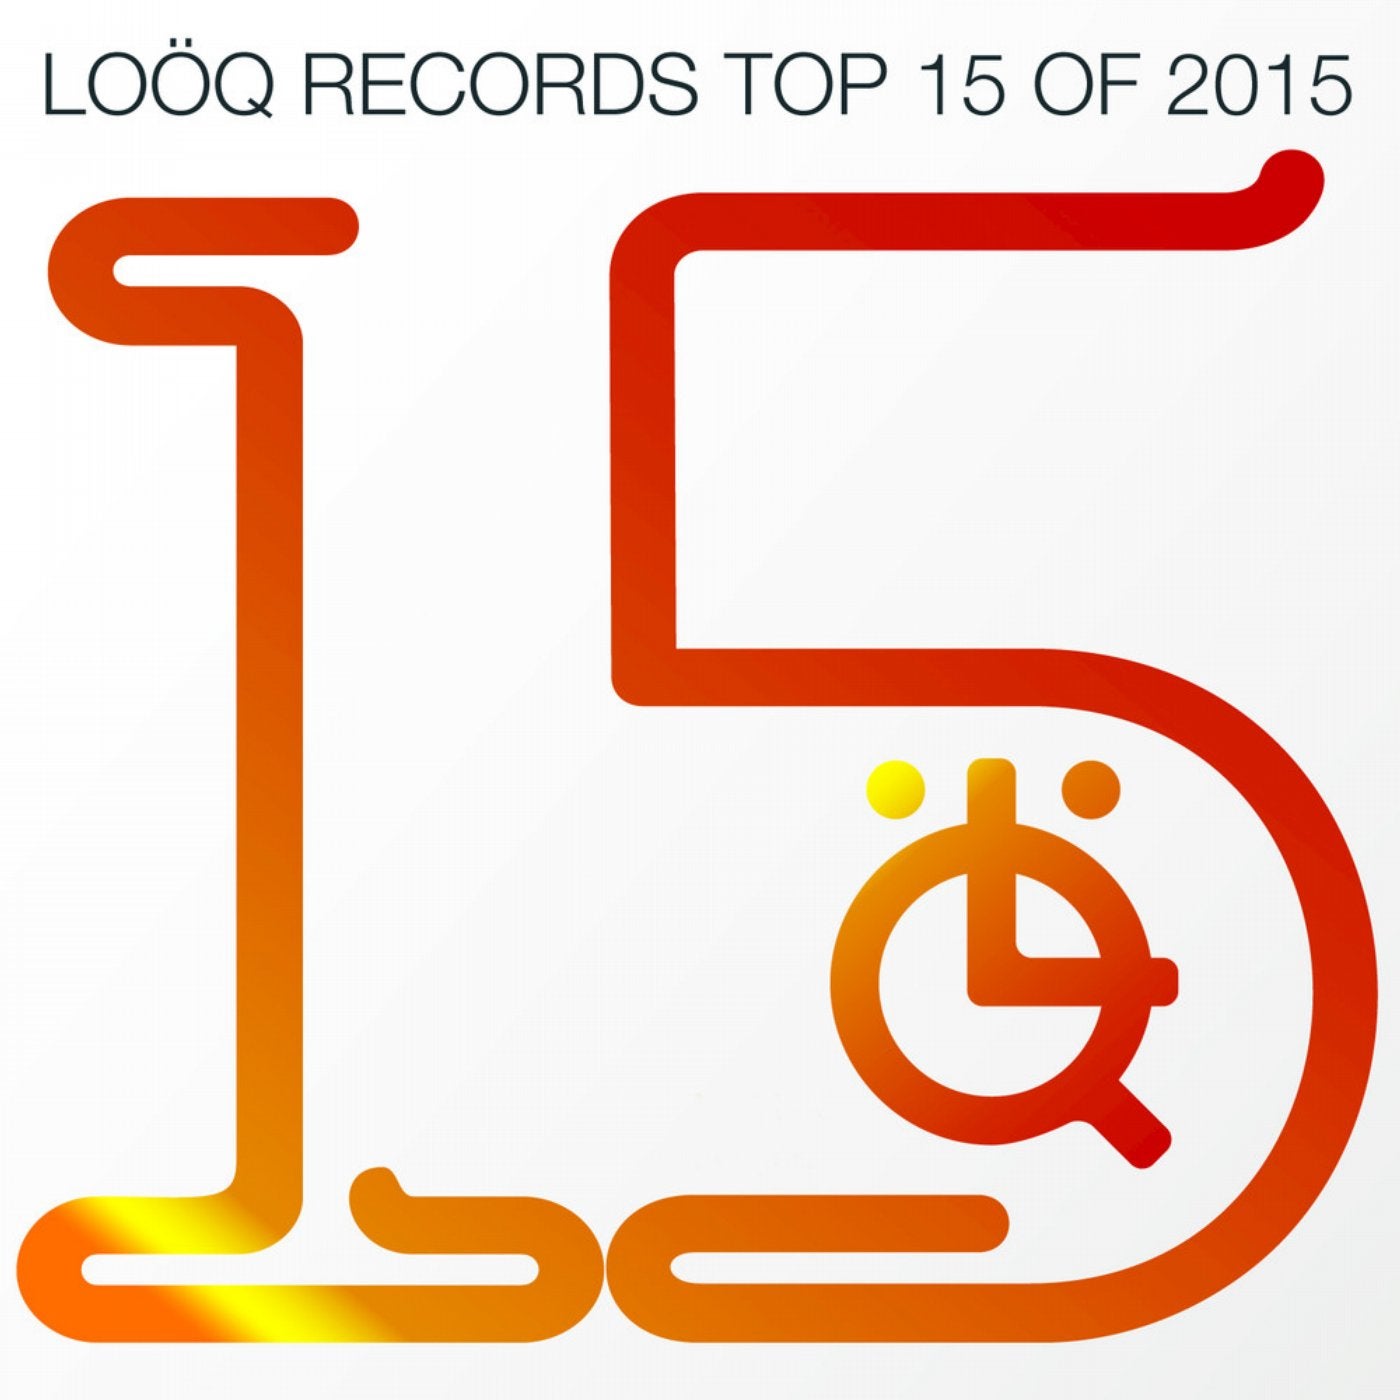 Top 15 of 2015